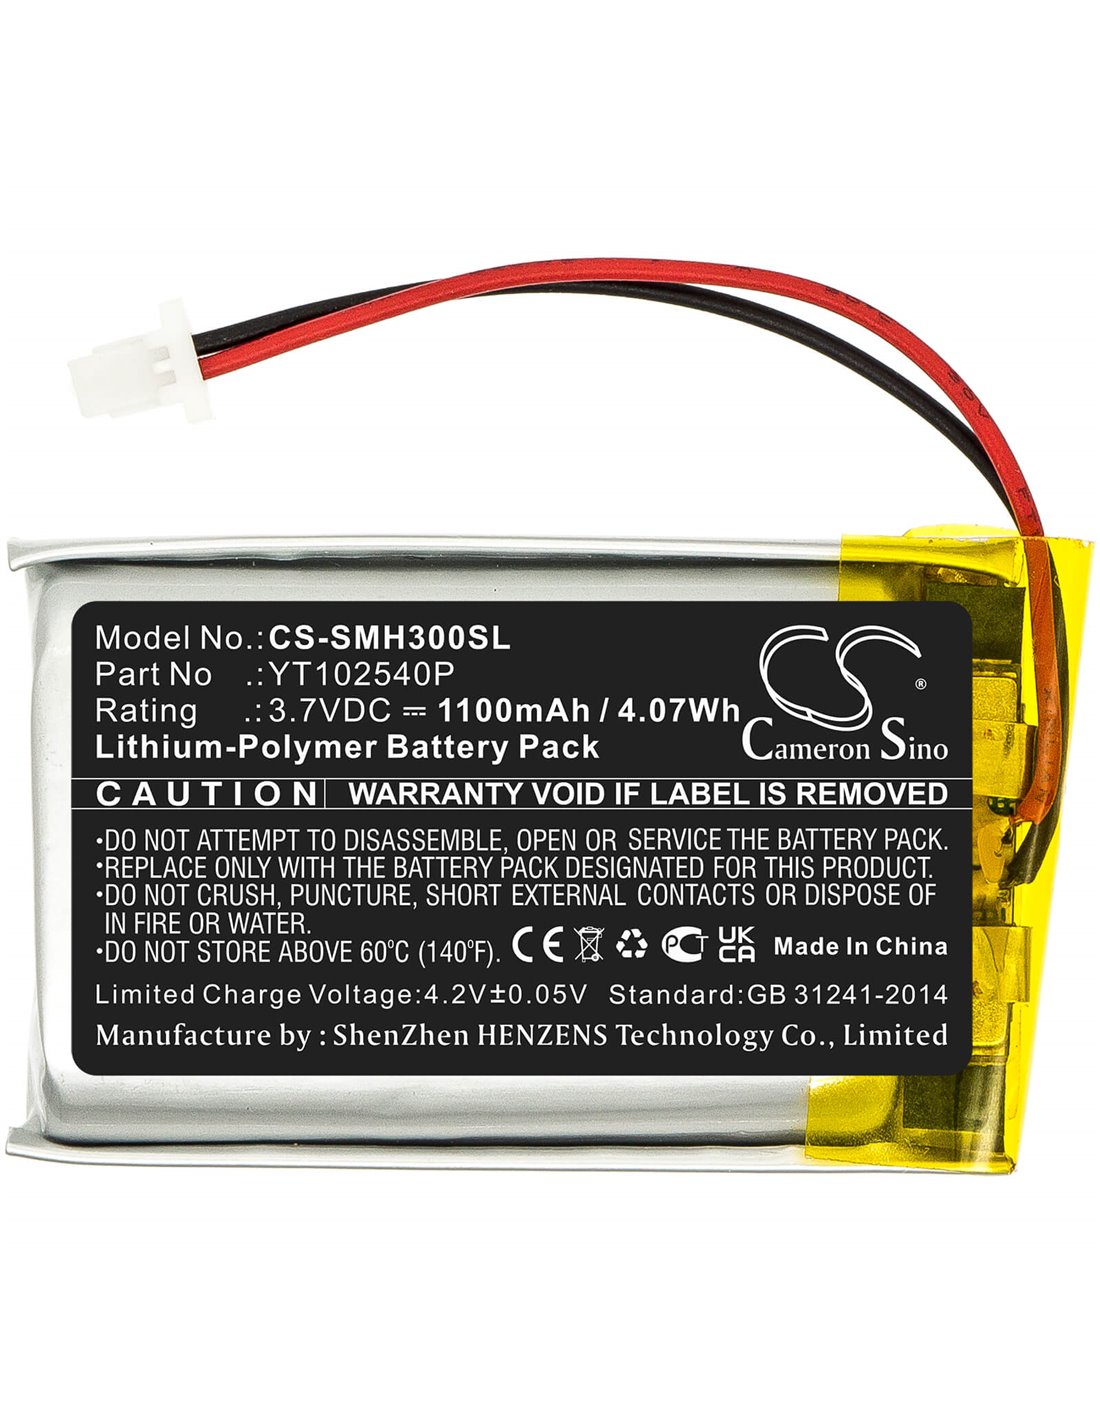 3.7V, 1100mAh, Li-Polymer Battery fits Sena, 30k, 50s, Sp46, 4.07Wh